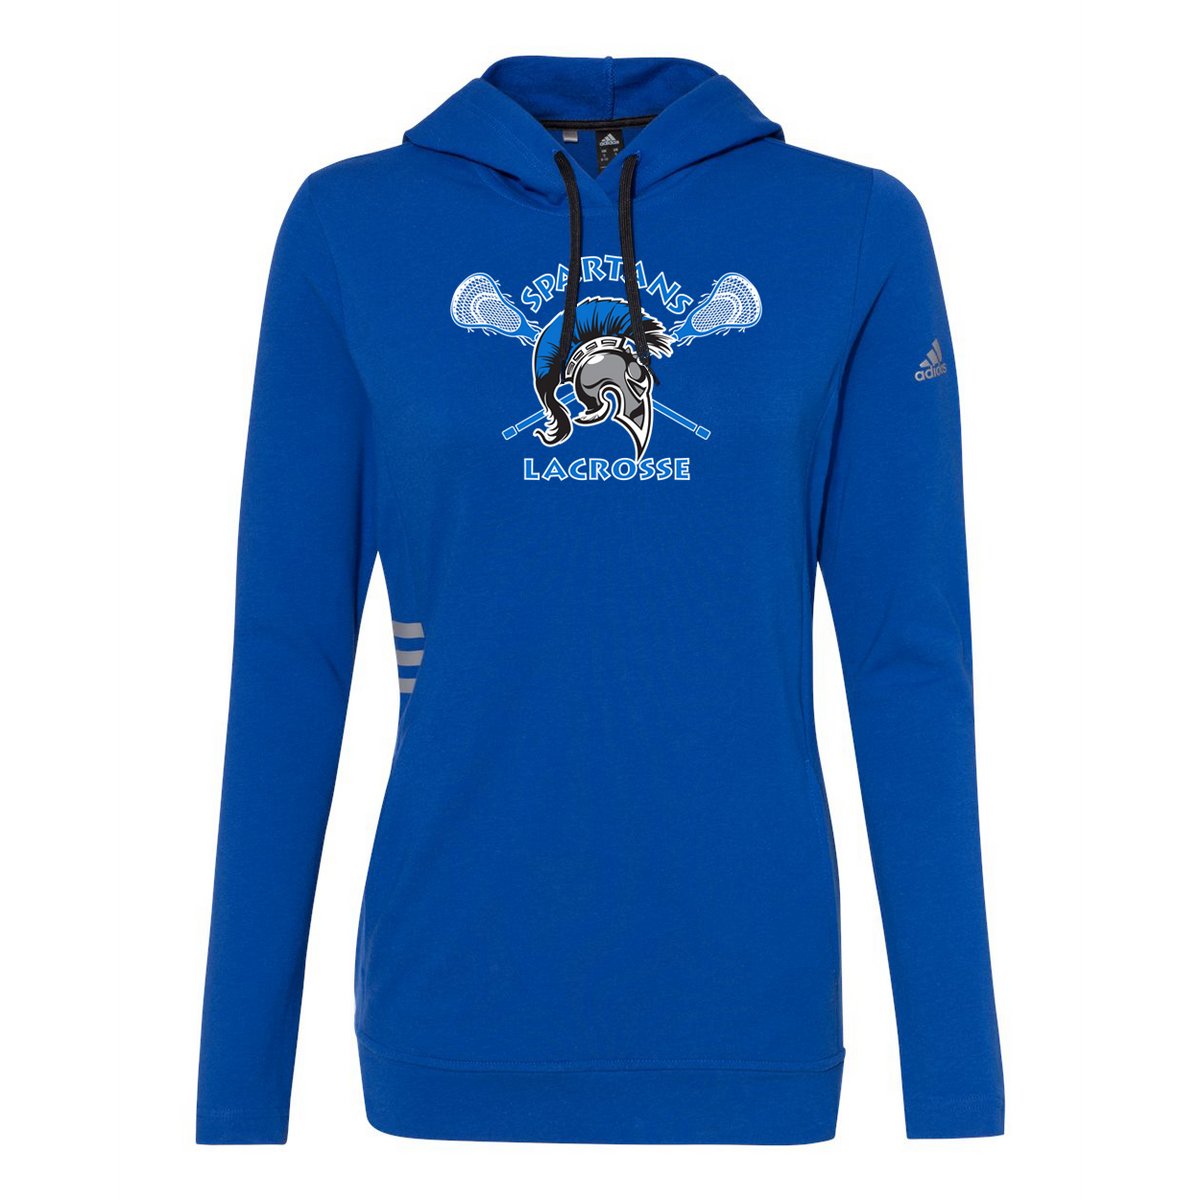 Burlington Lacrosse Adidas Women's Sweatshirt